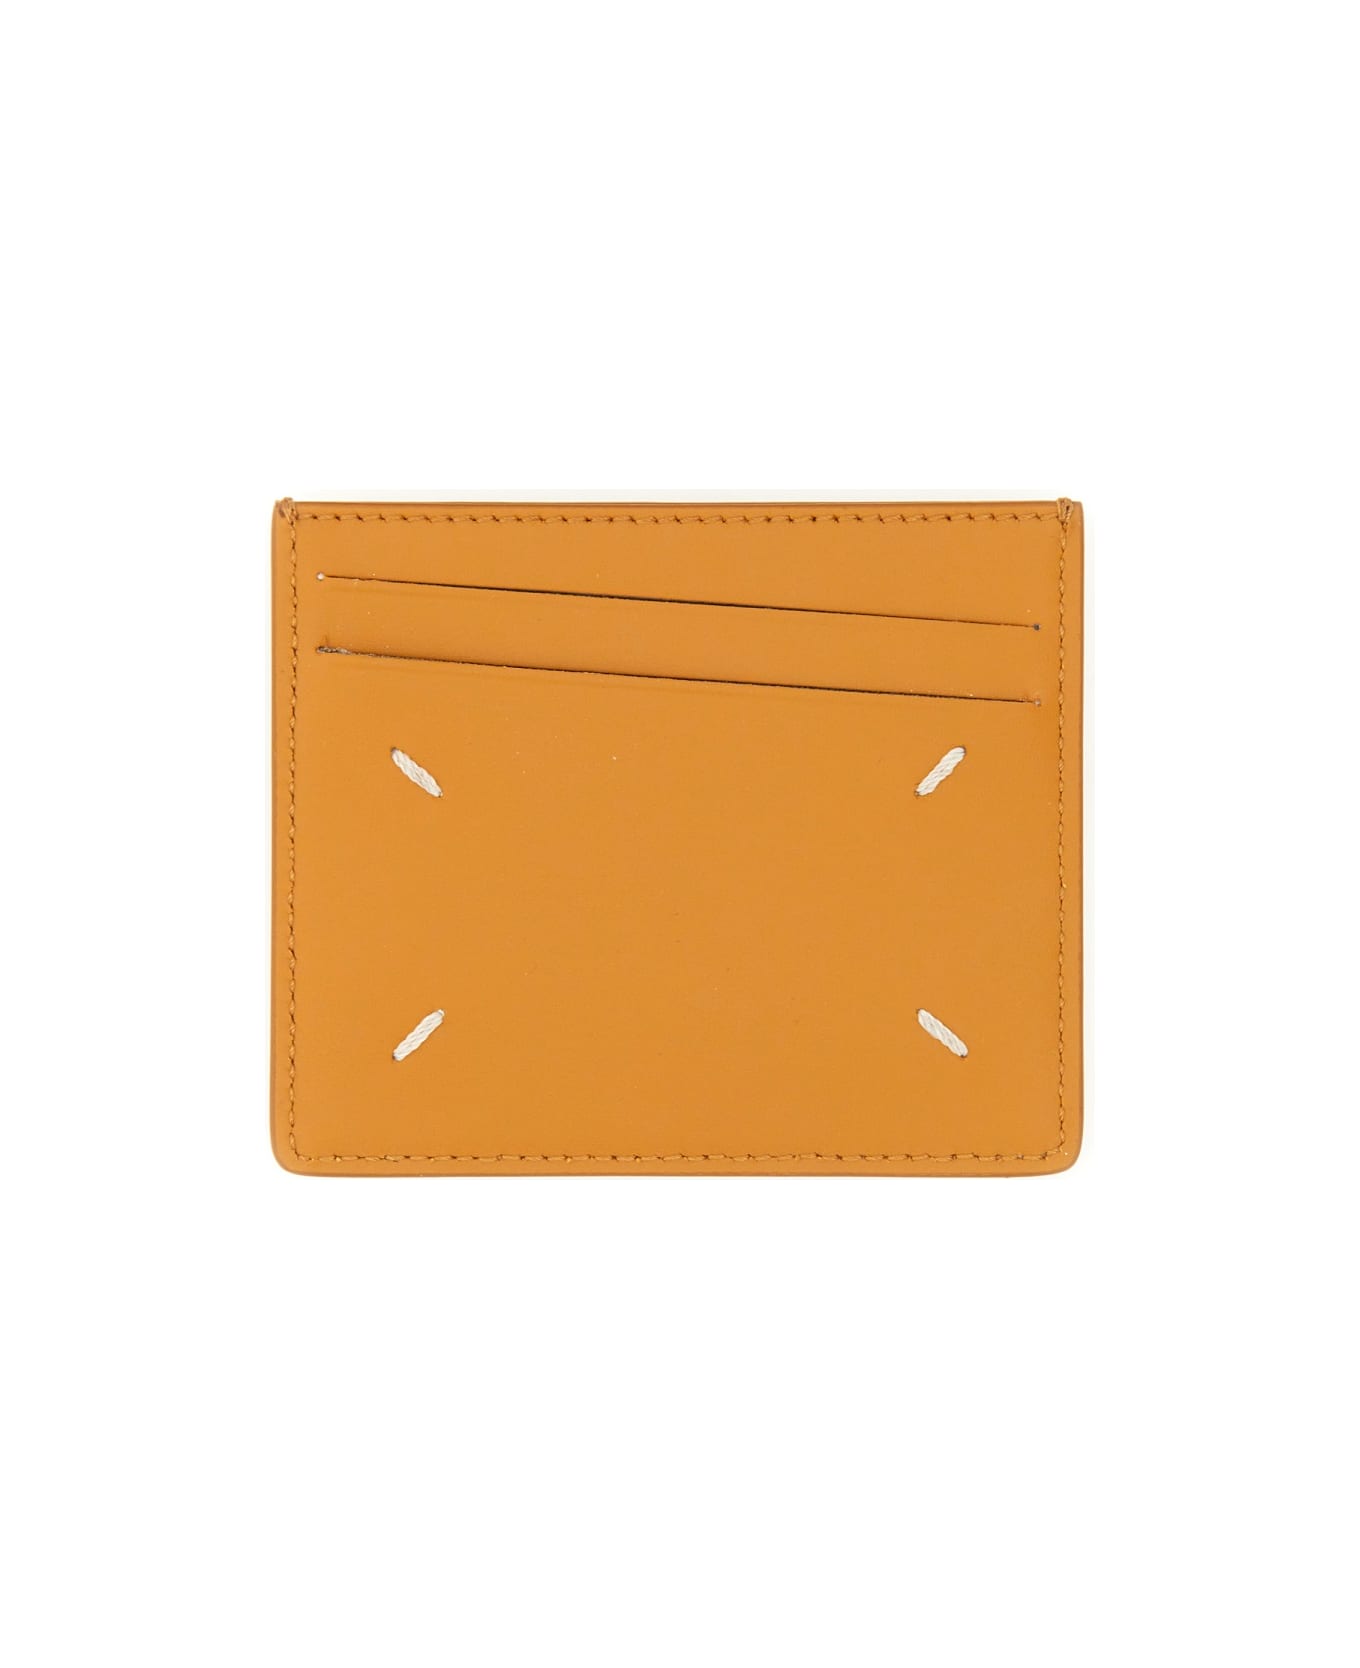 Maison Margiela Leather Card Holder - BUFF